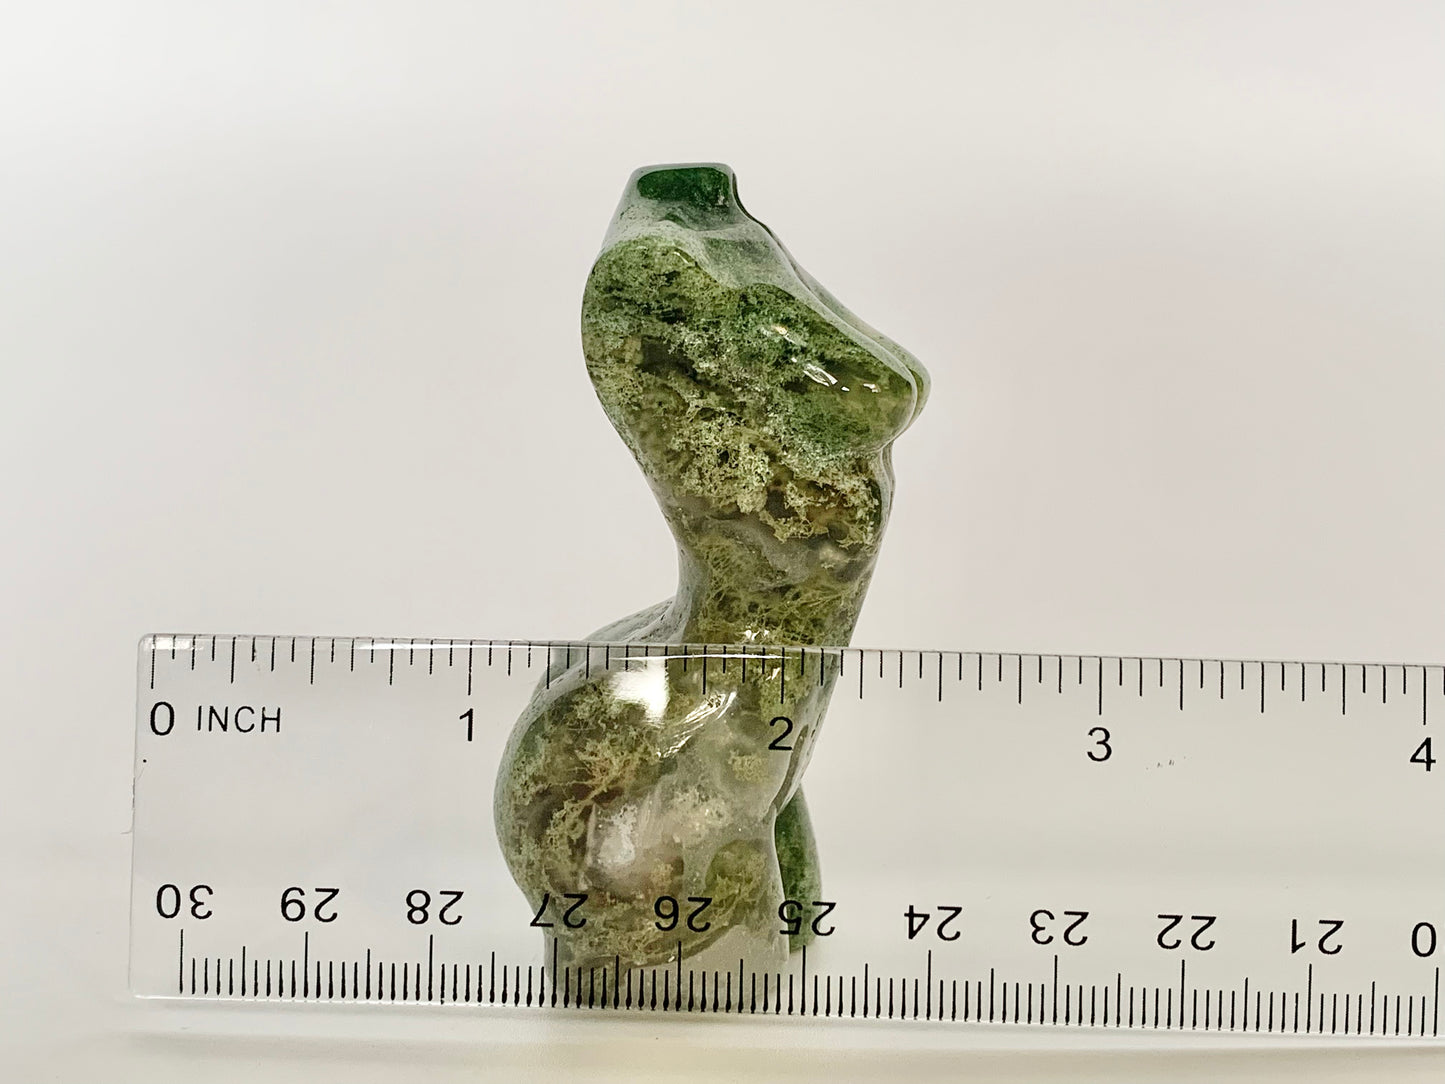 Green Moss Agate Body, 2.75”